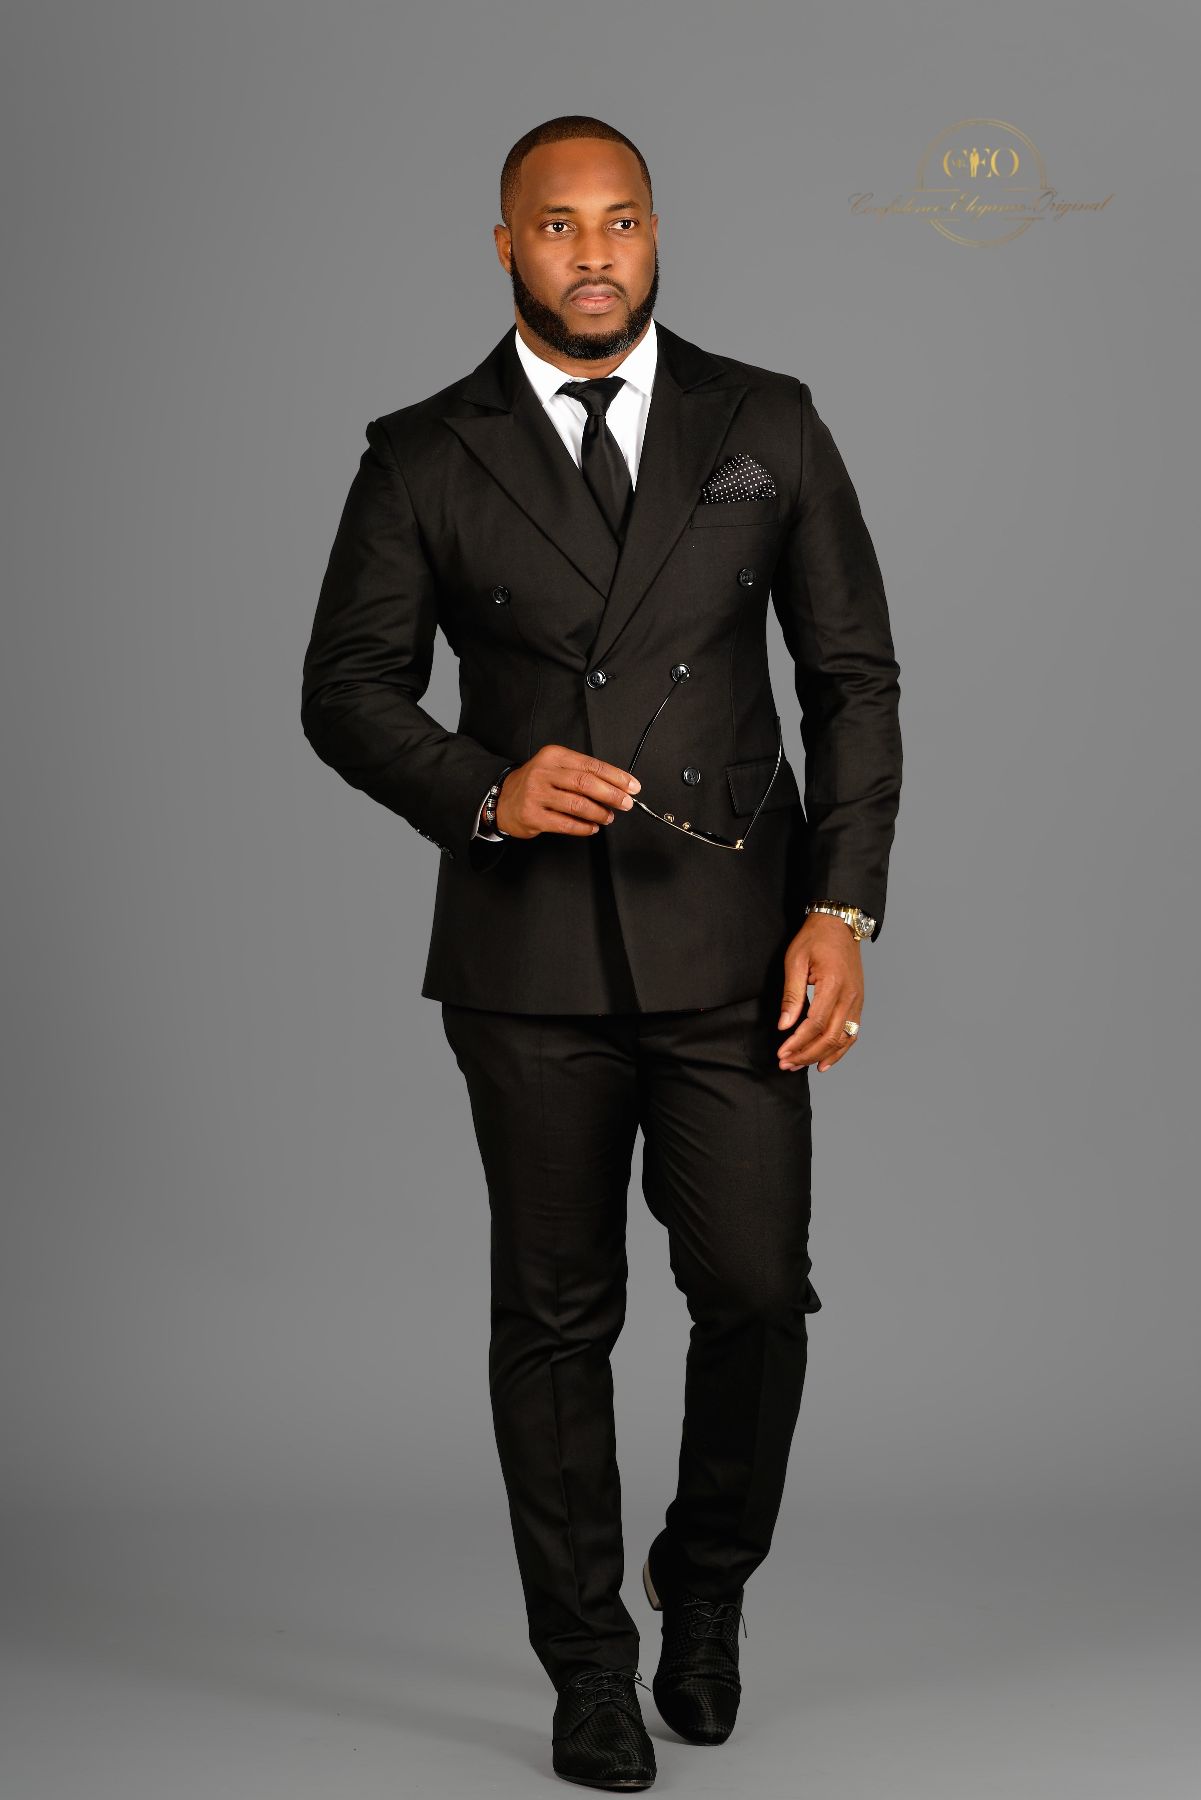 Best Suits for Men - Best Suit Stores & Places to Buy a Suit Online |  Hollywood Suits